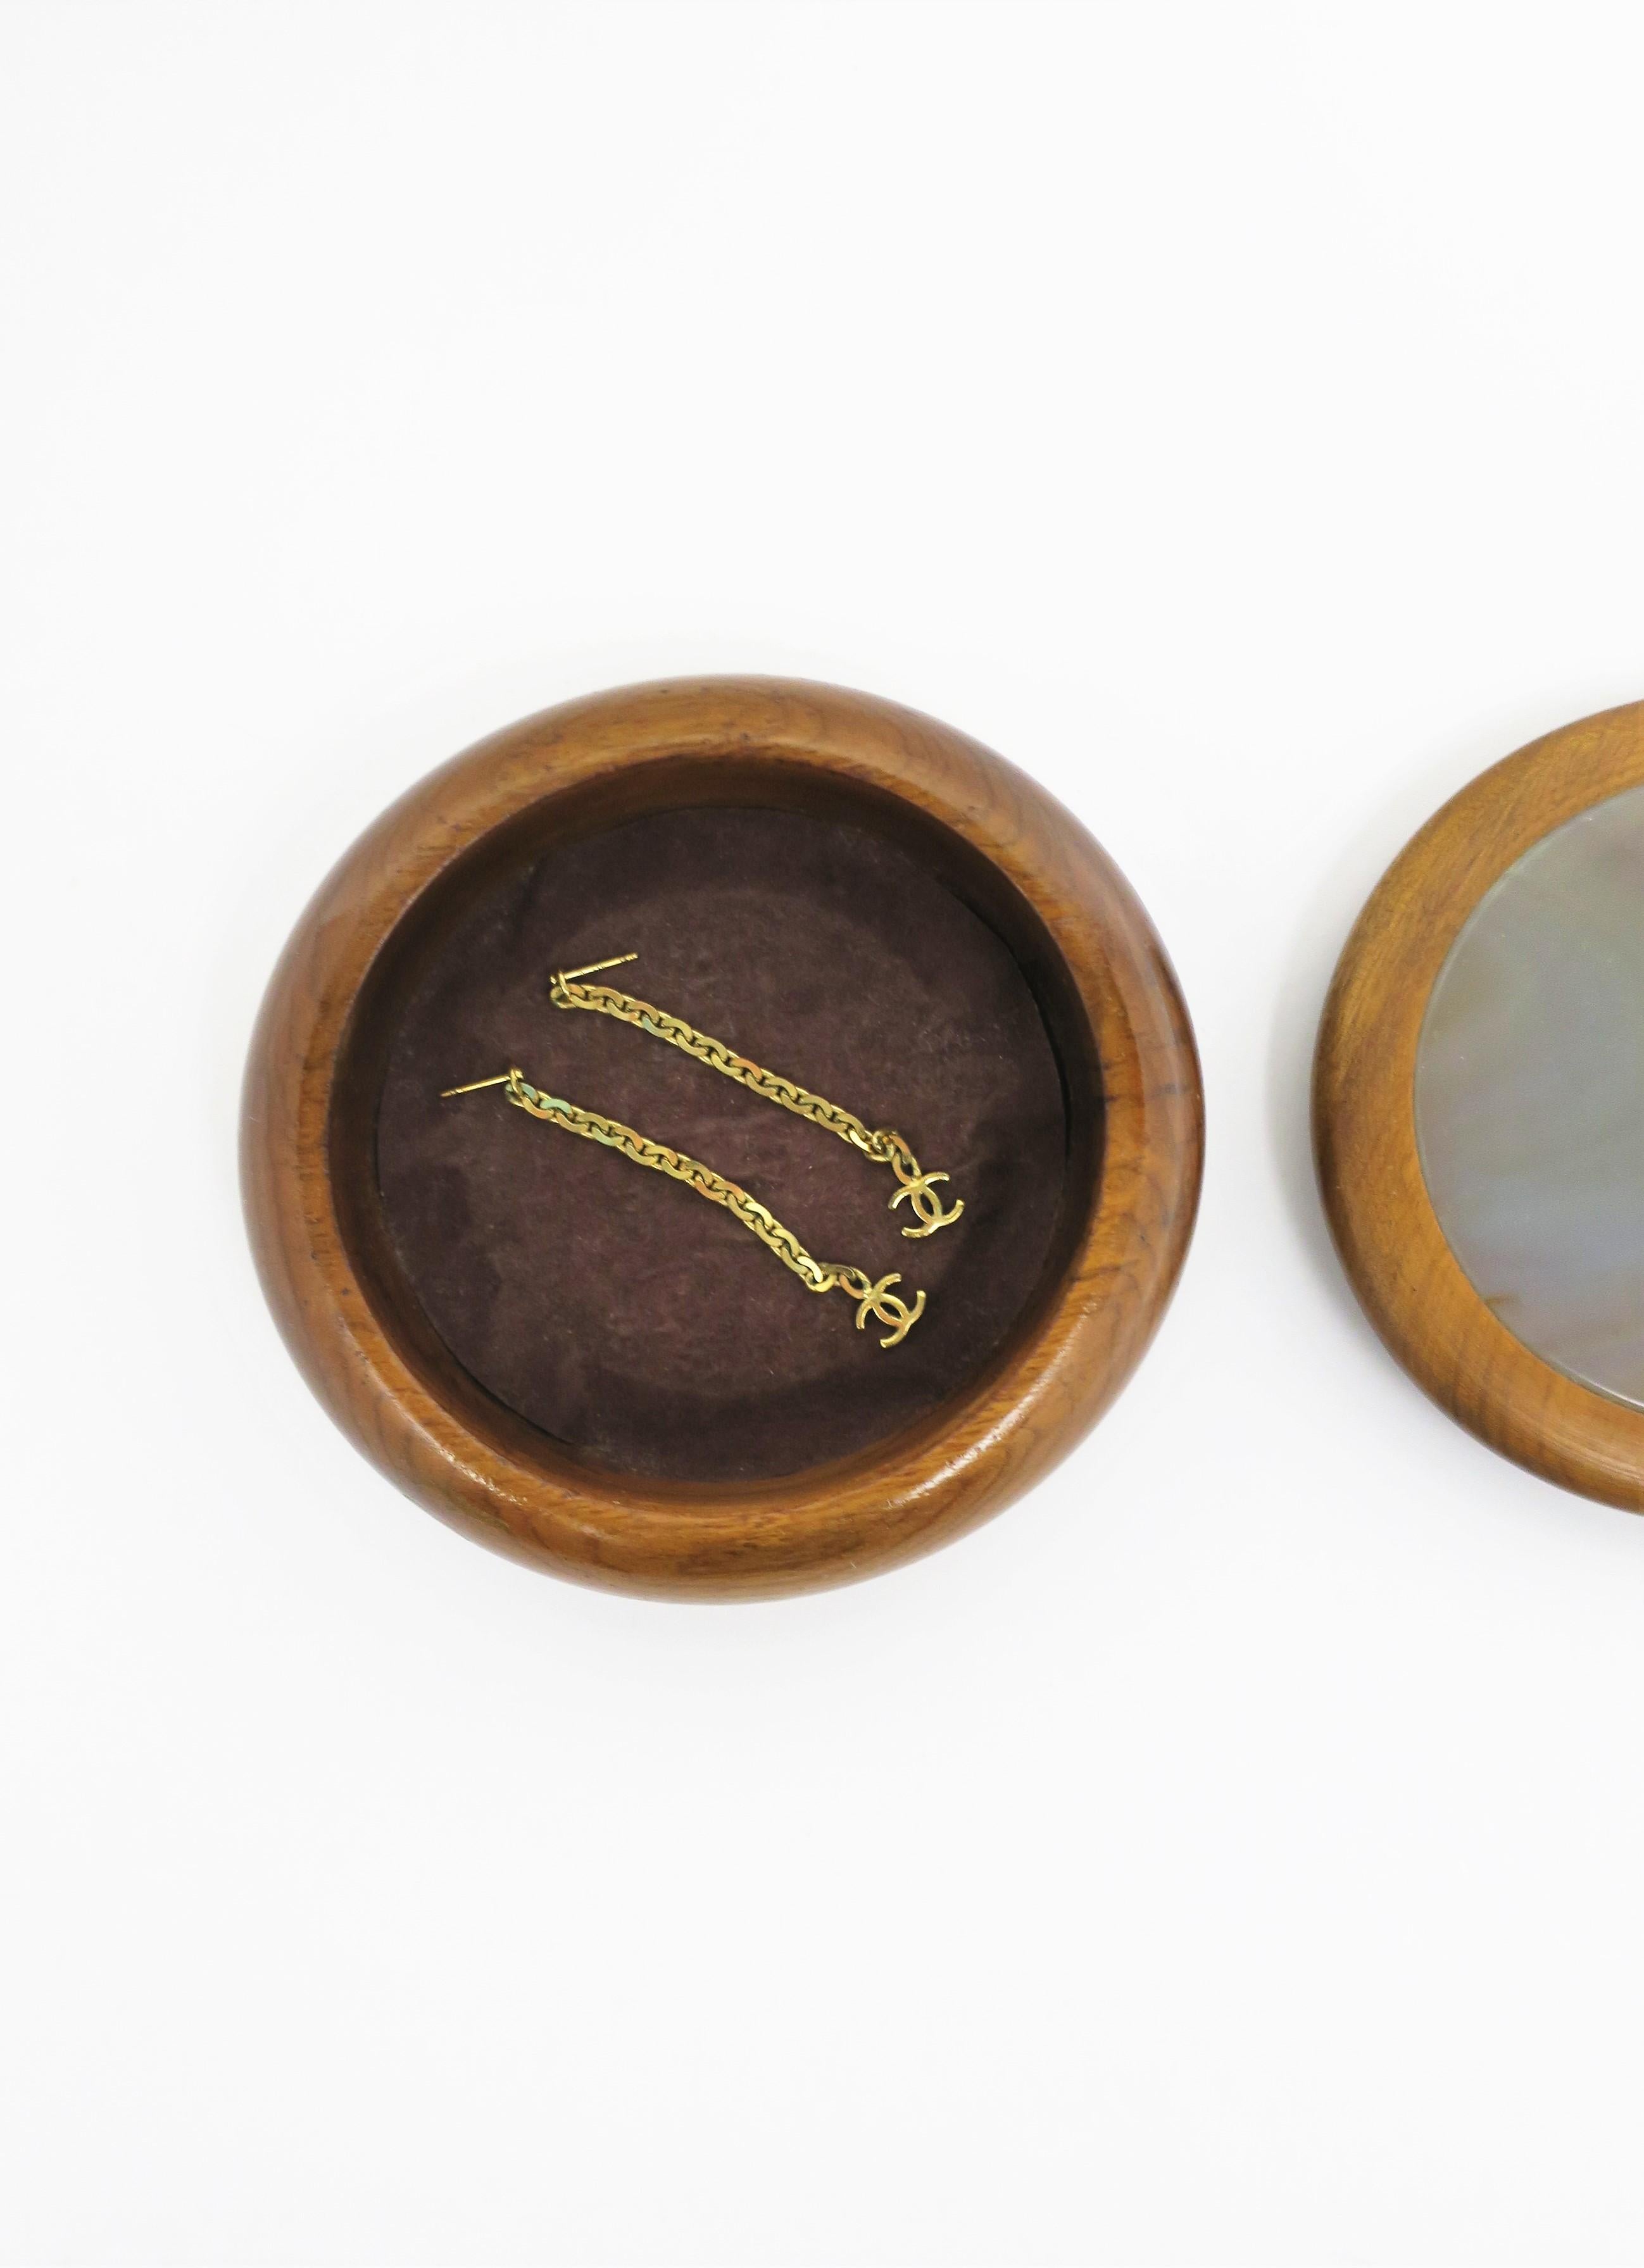 Brazilian Agate Onyx and Wood Round Jewelry or Trinket Box, Brazil, 1980s For Sale 5